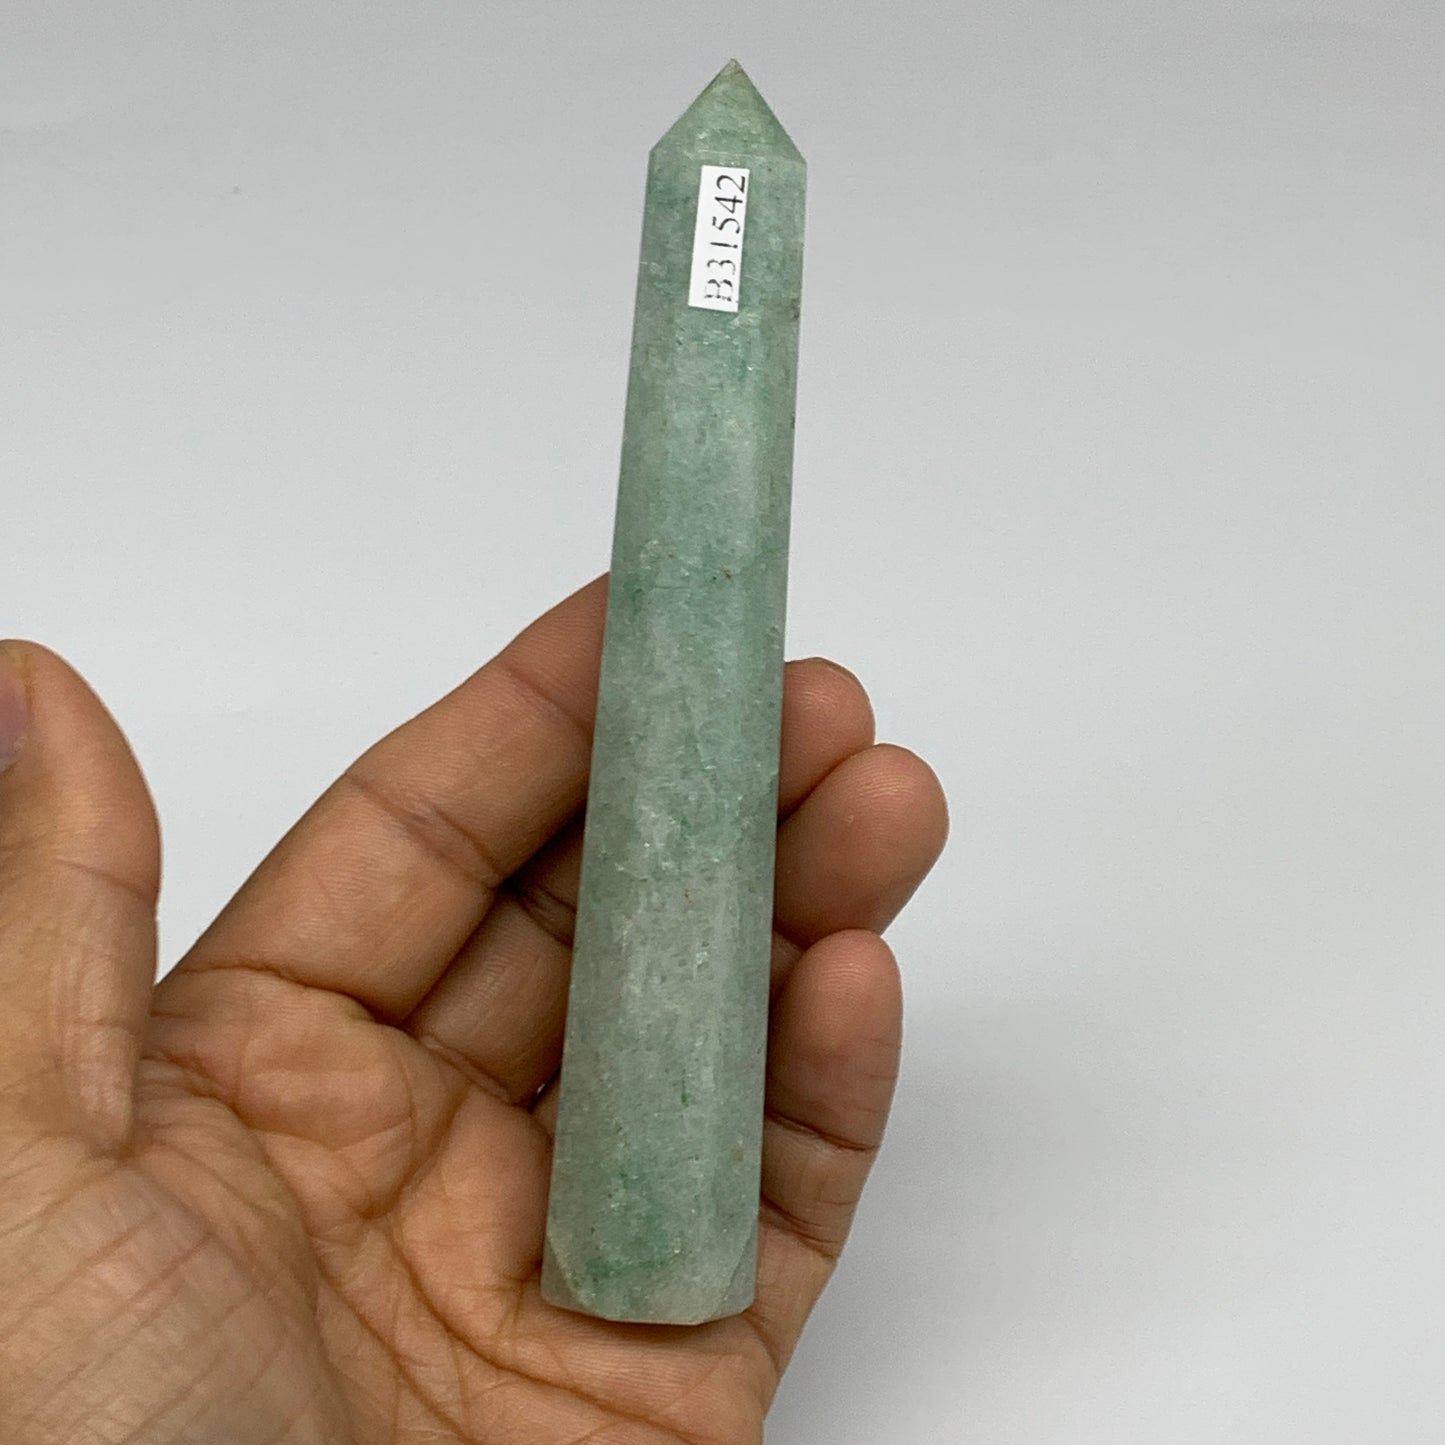 83g, 4.8"x0.8", Green Aventurine Tower Obelisk Point Crystal @India,B31542